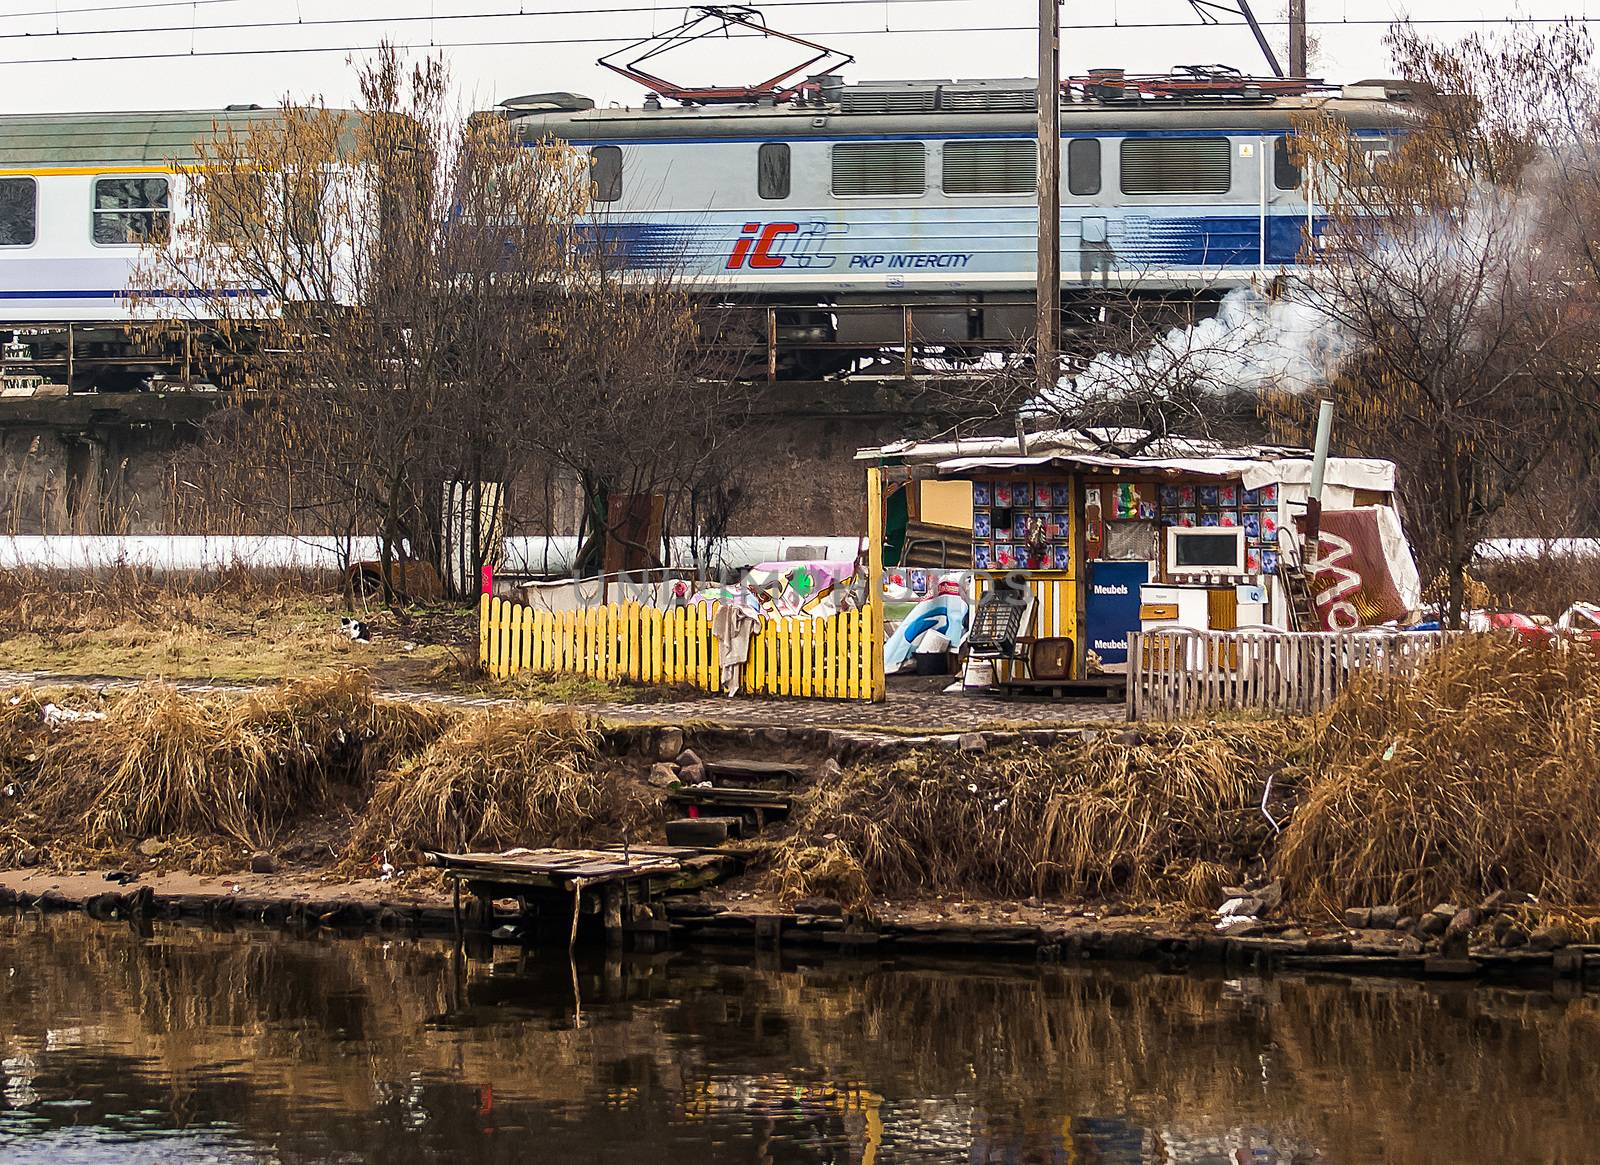 Szczecin, Poland - March 5, 2014: Homeless camp near the railroad tracks.